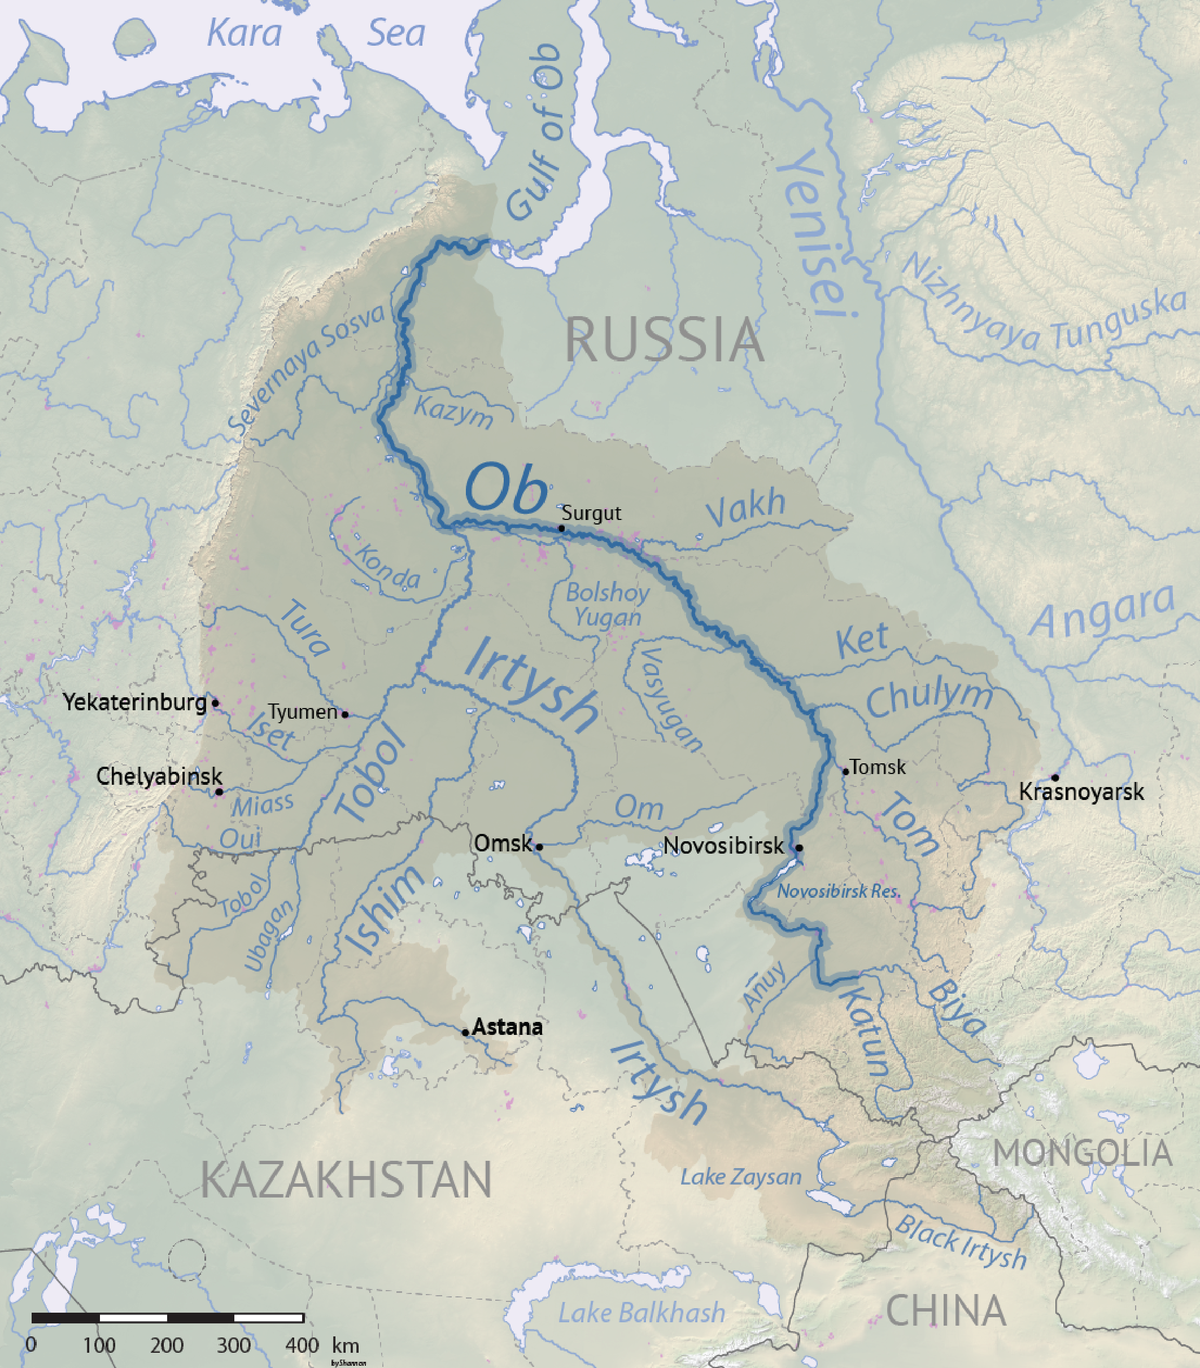 https://upload.wikimedia.org/wikipedia/commons/thumb/1/1c/Ob_river_basin_map.png/1200px-Ob_river_basin_map.png